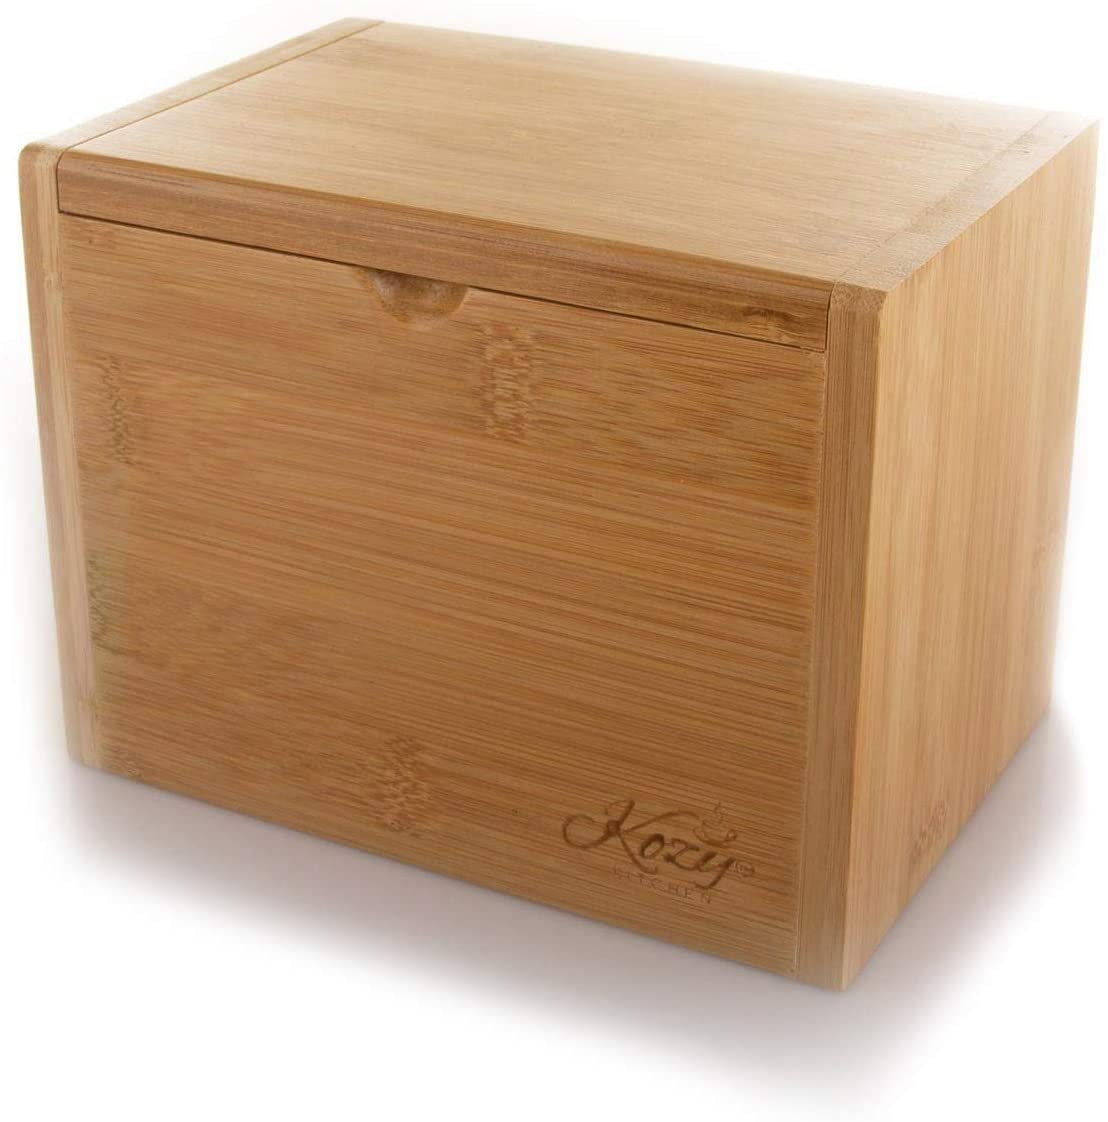 Recipe Card Box Premium Bamboo Recipe Organizer Natural Wooden Finish Recipe Card Holder